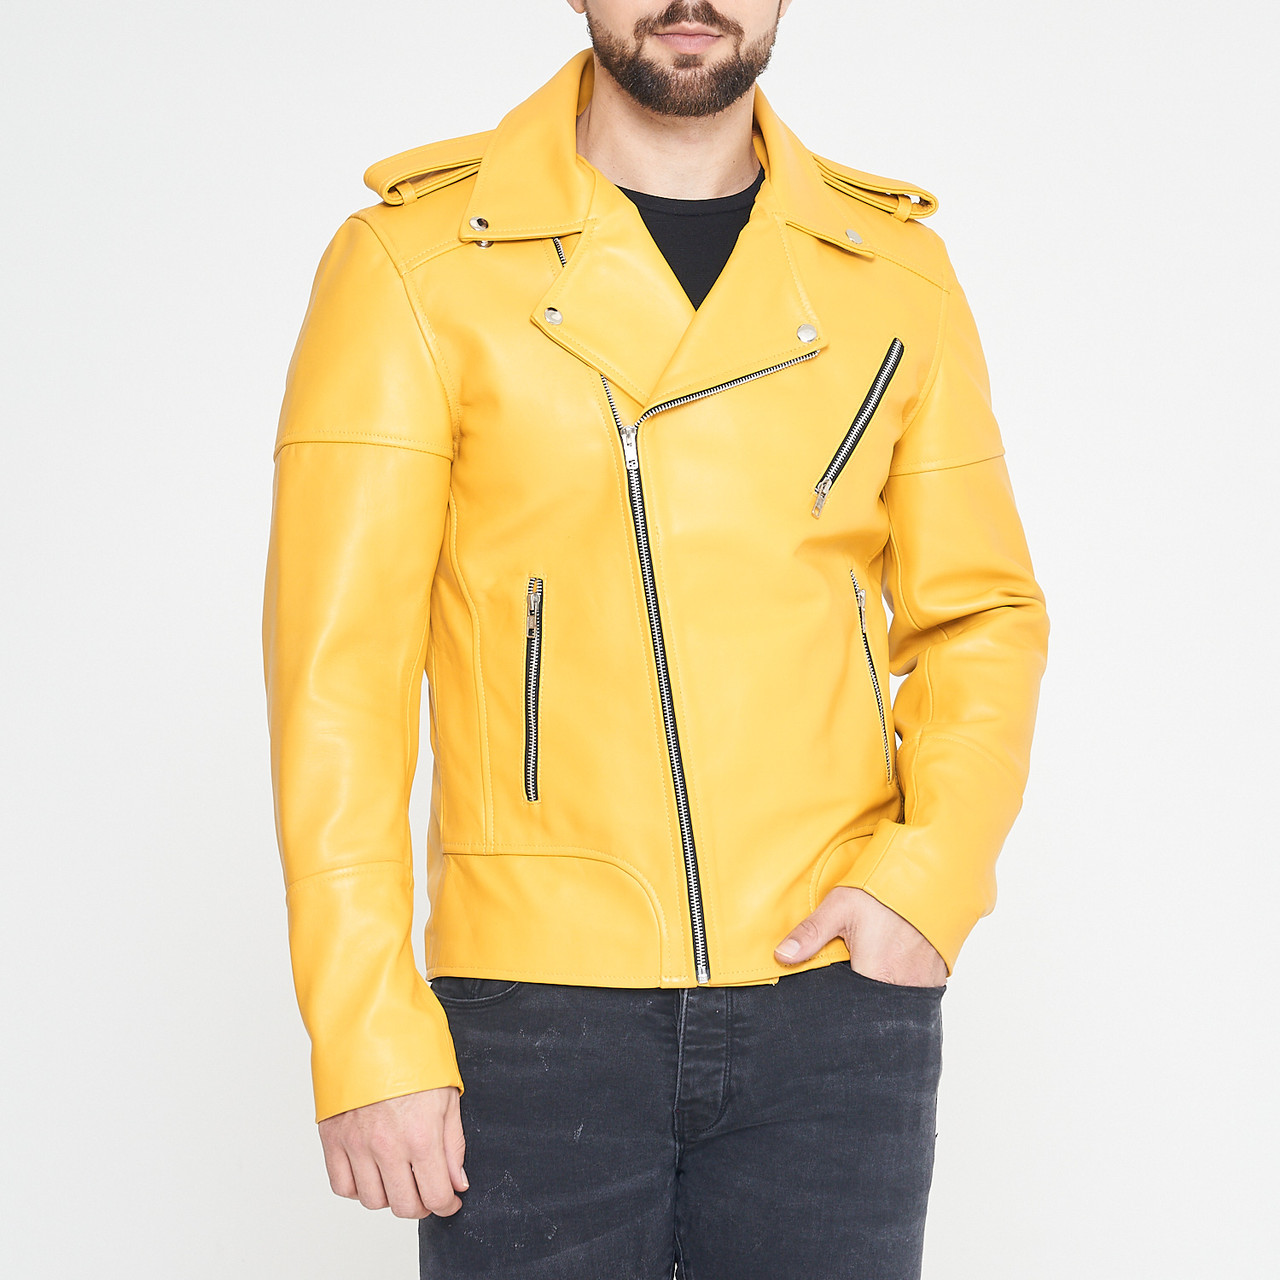 Men's Eccentric Yellow Leather Jacket